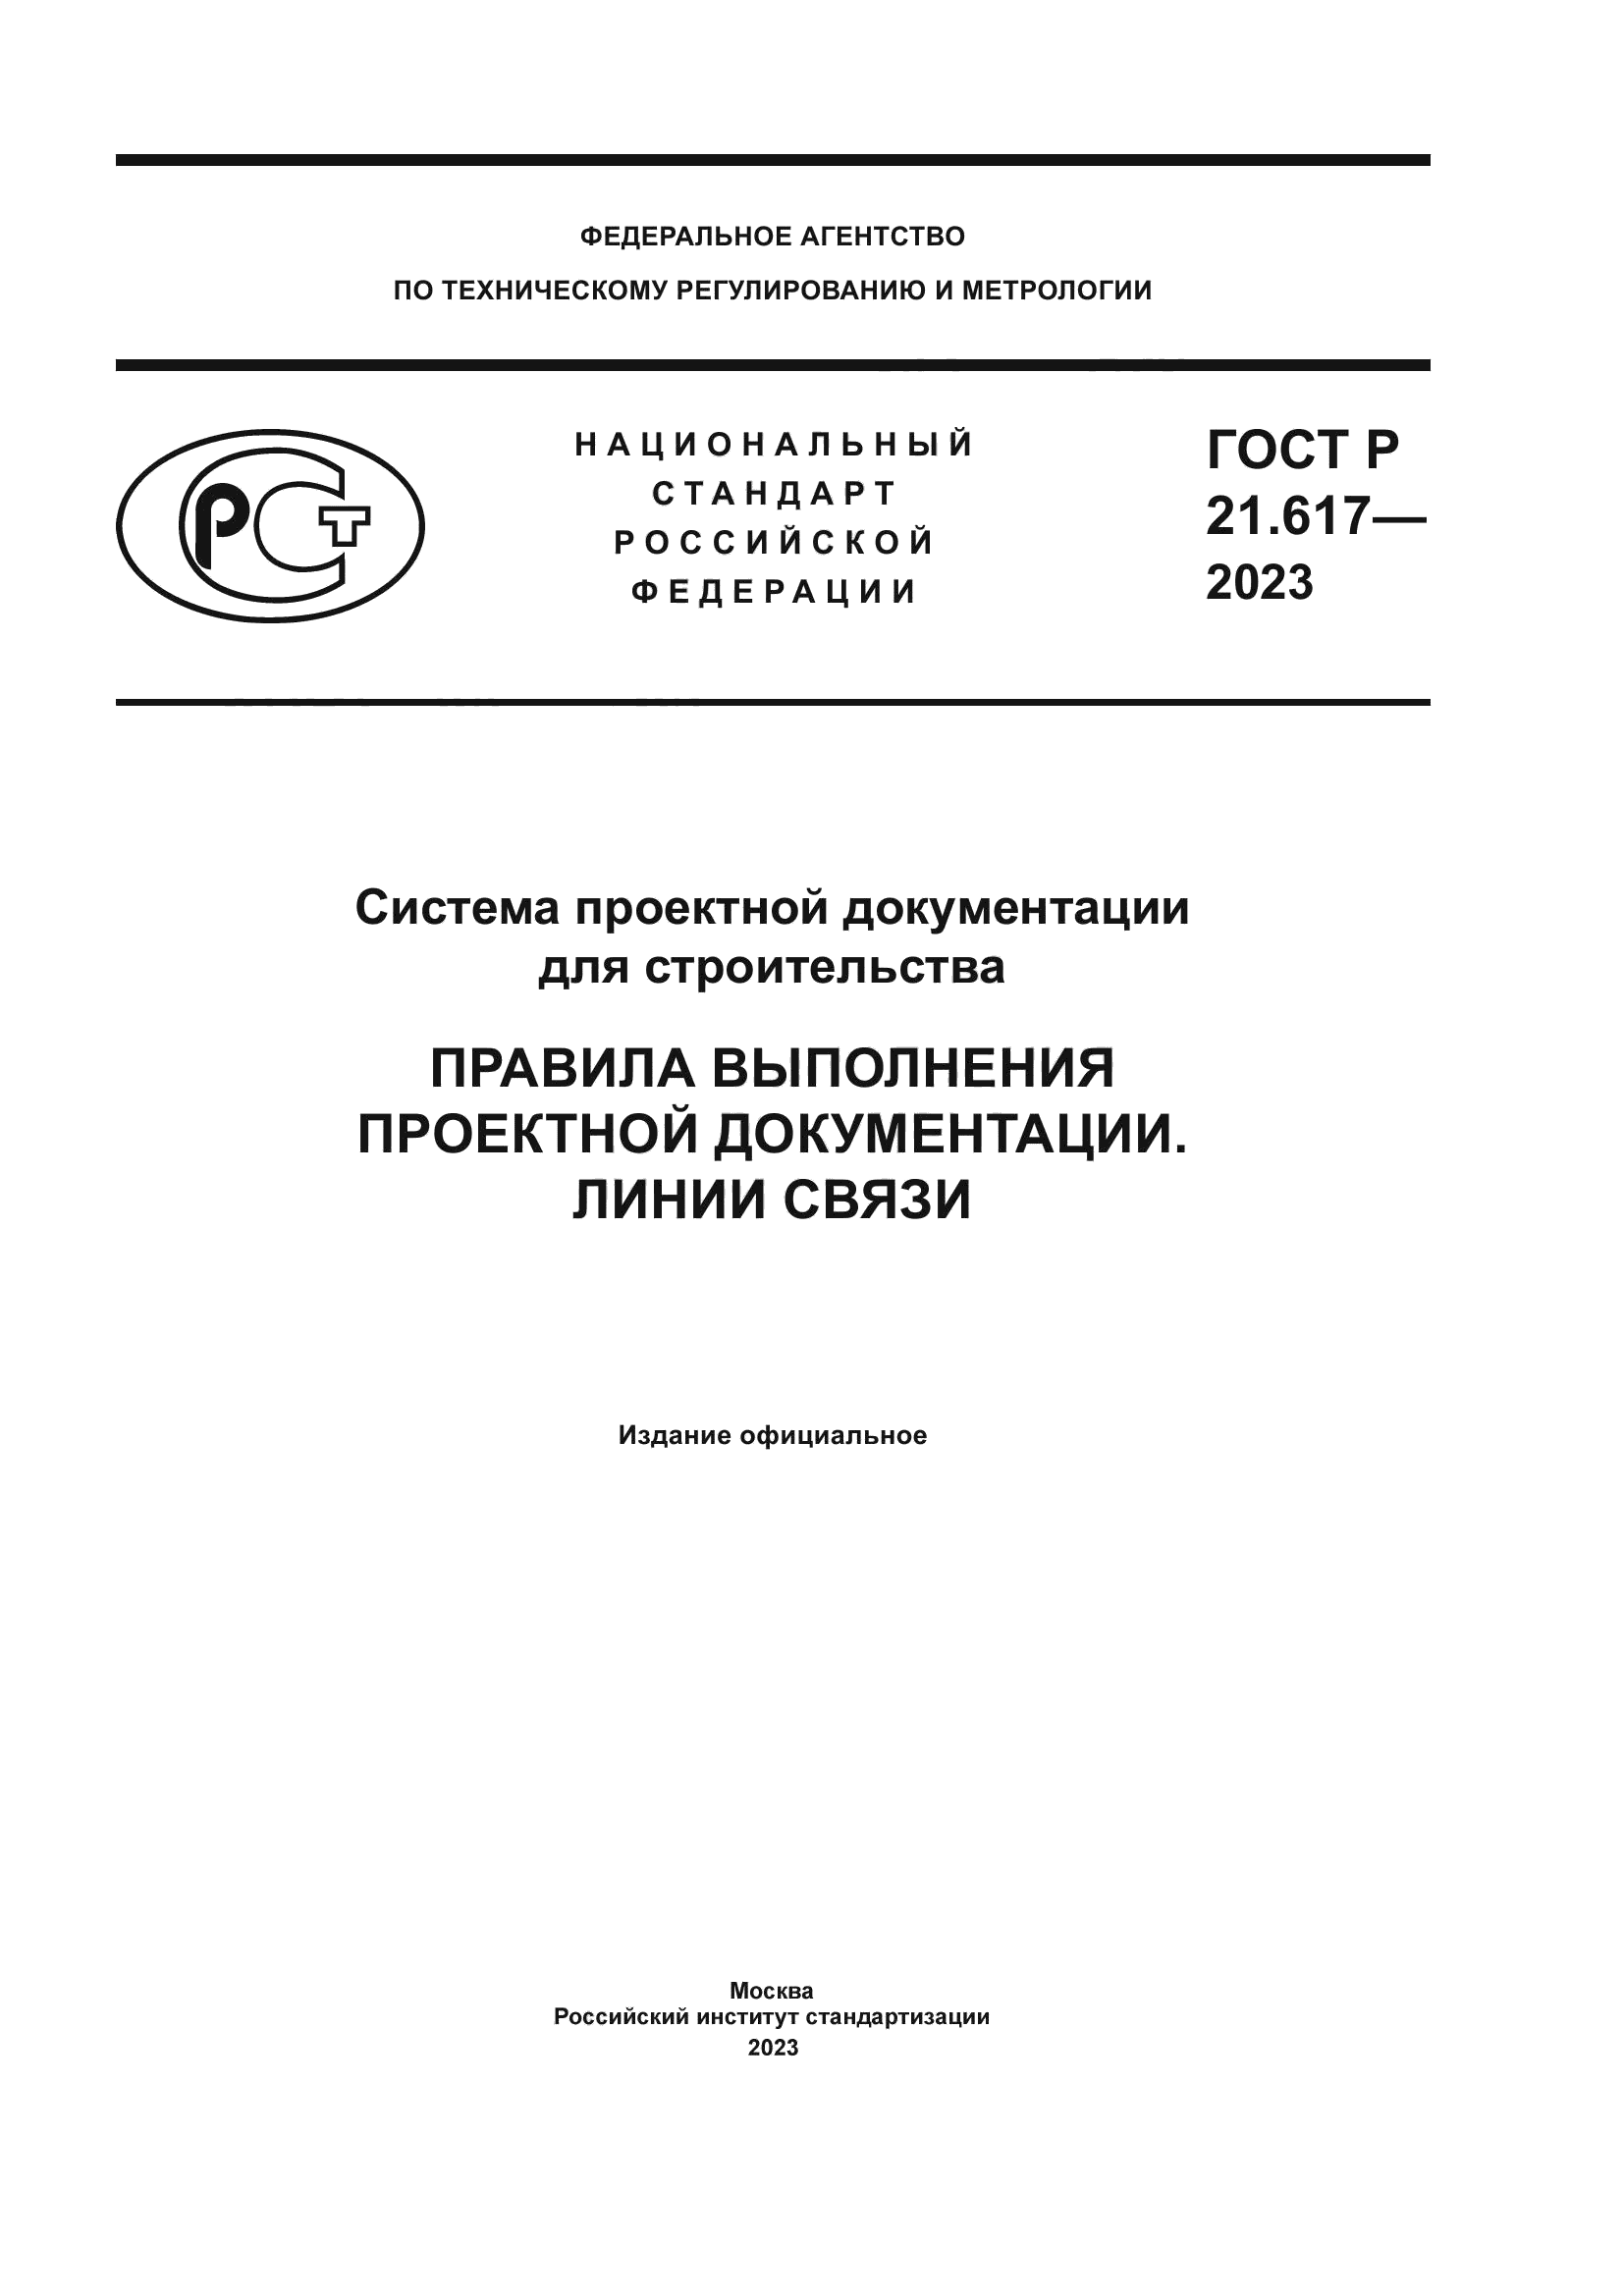 ГОСТ Р 21.617-2023